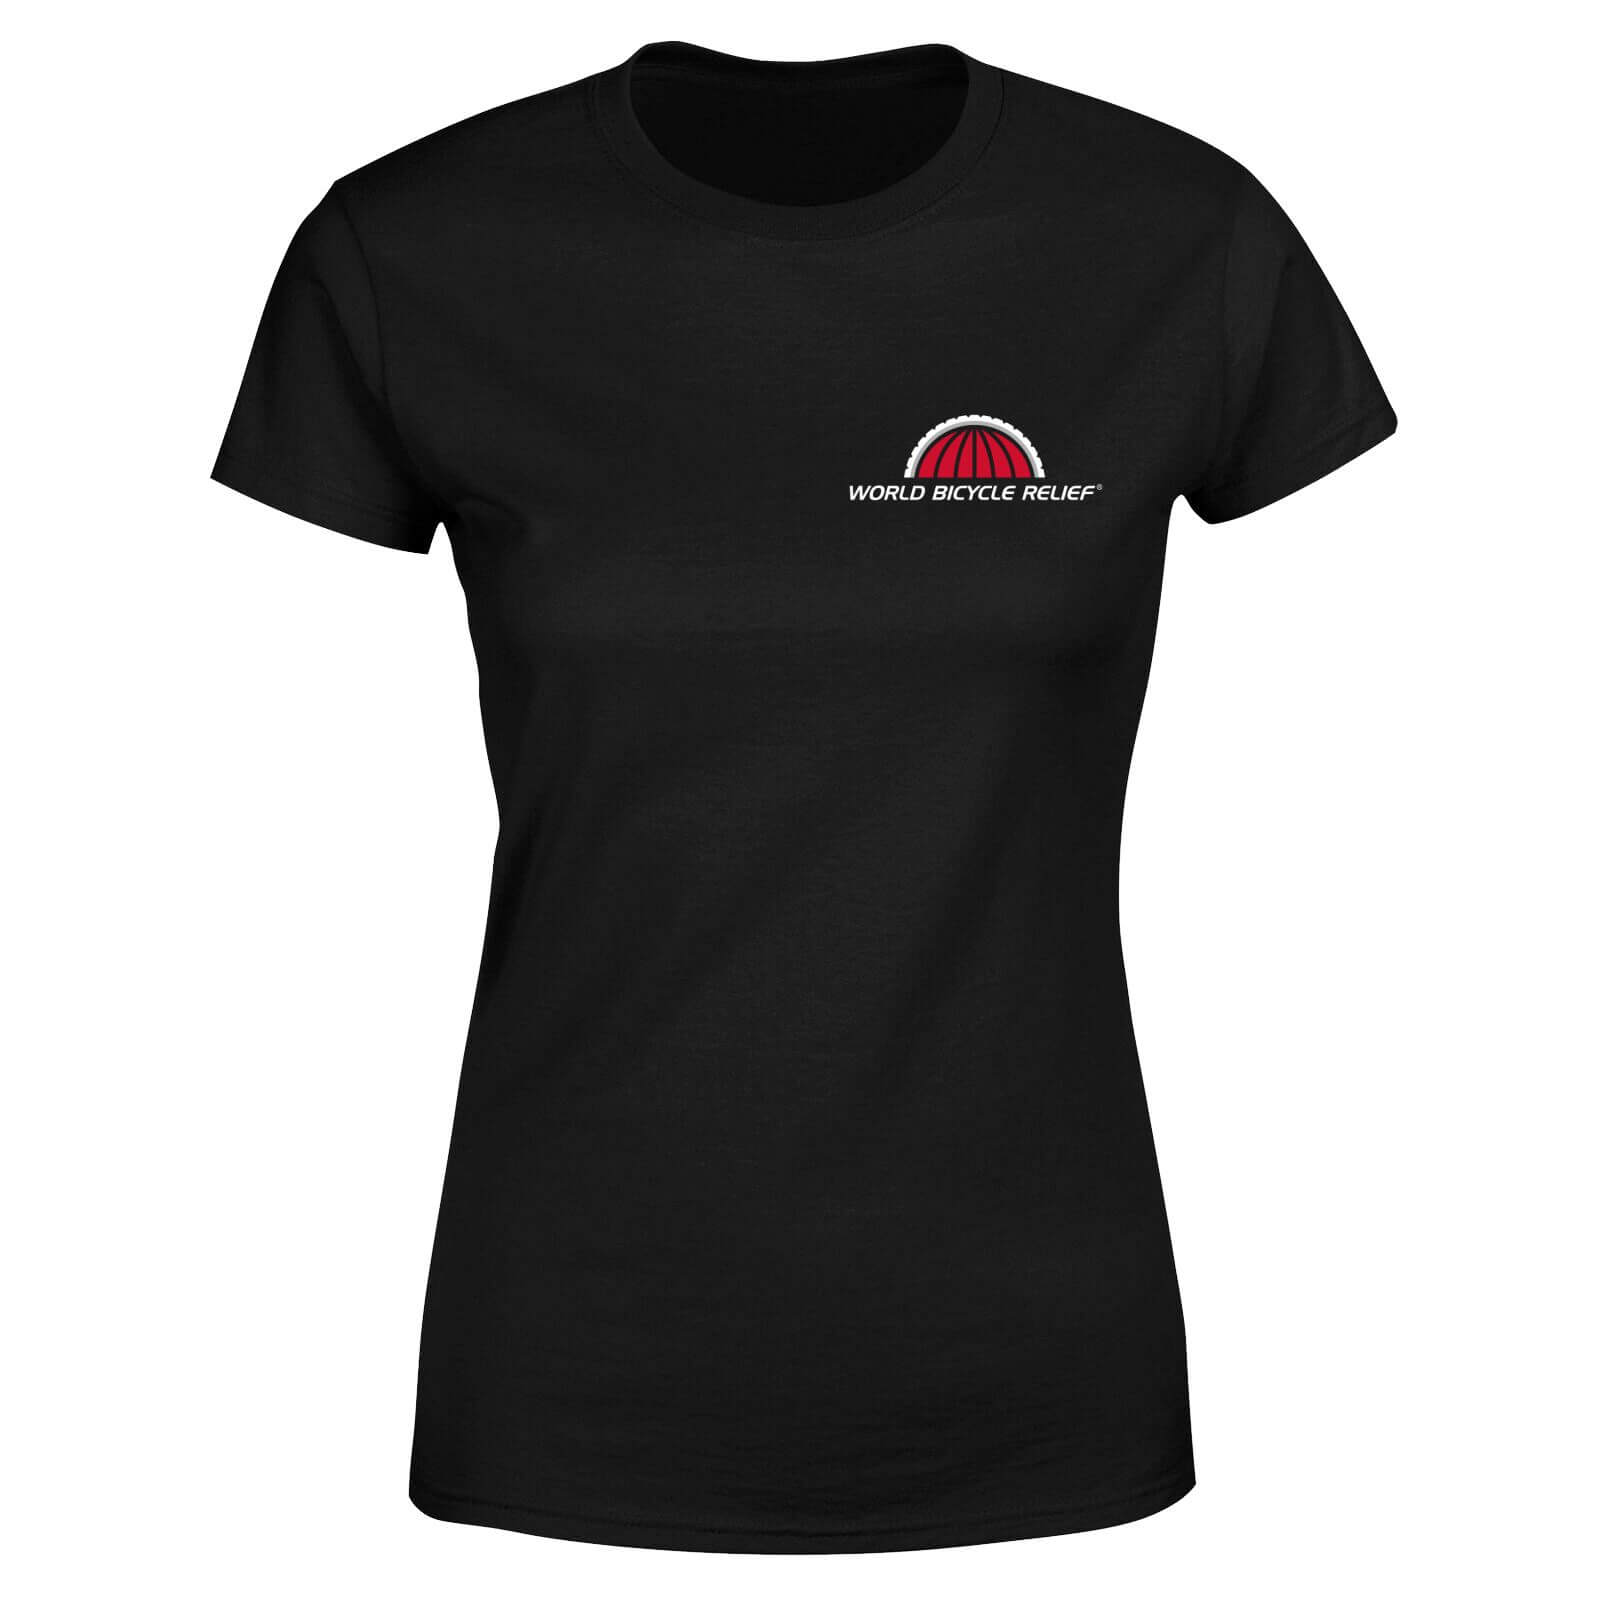 Fausto Coppi Women's T-Shirt - Black - S - Black